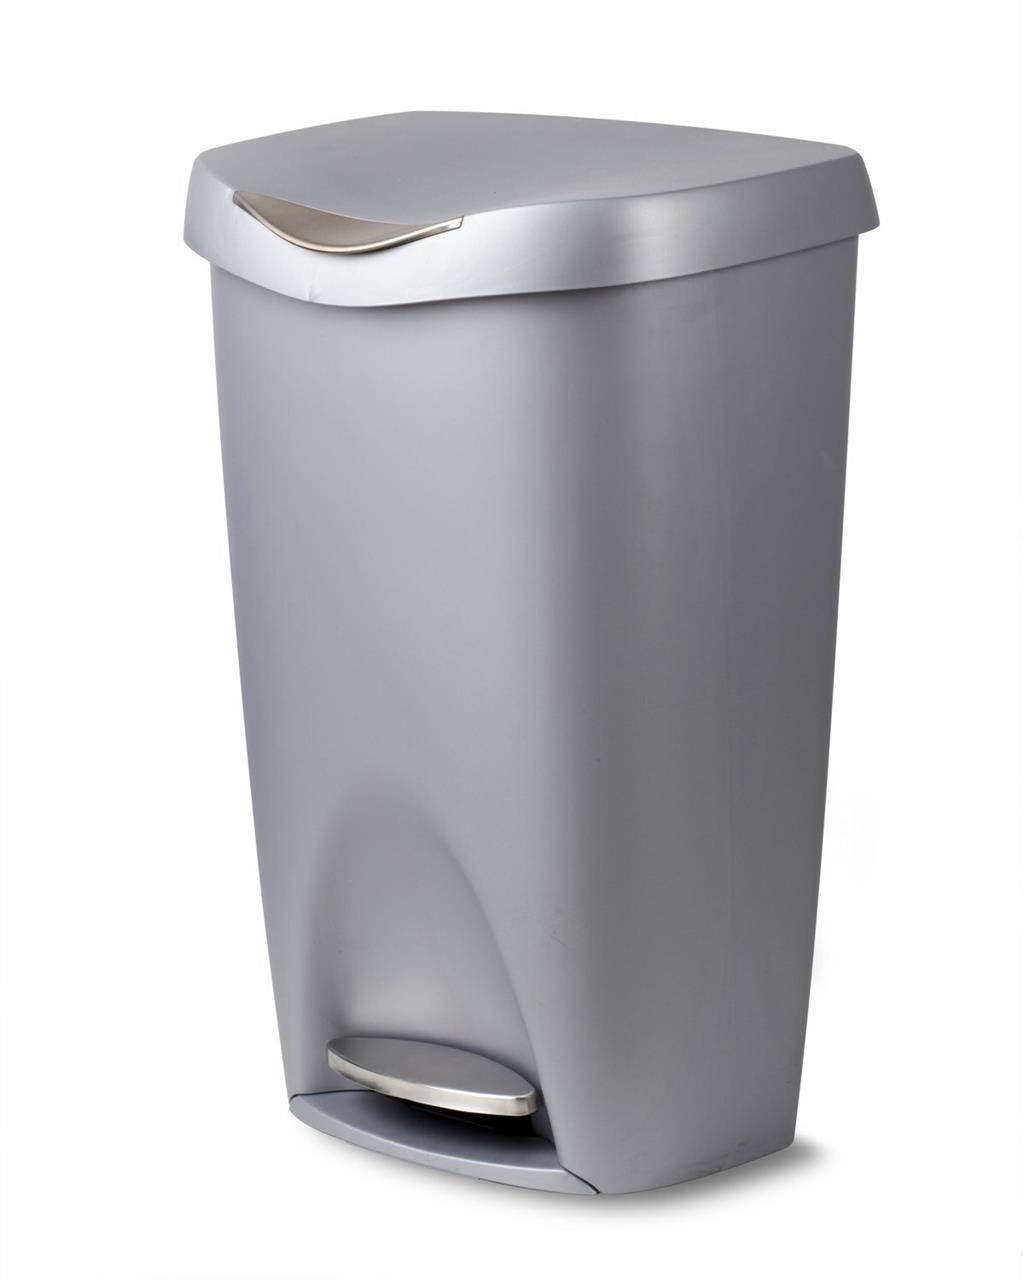 Umbra Brim 13 Gallon Trash Can with Lid - Large Ki